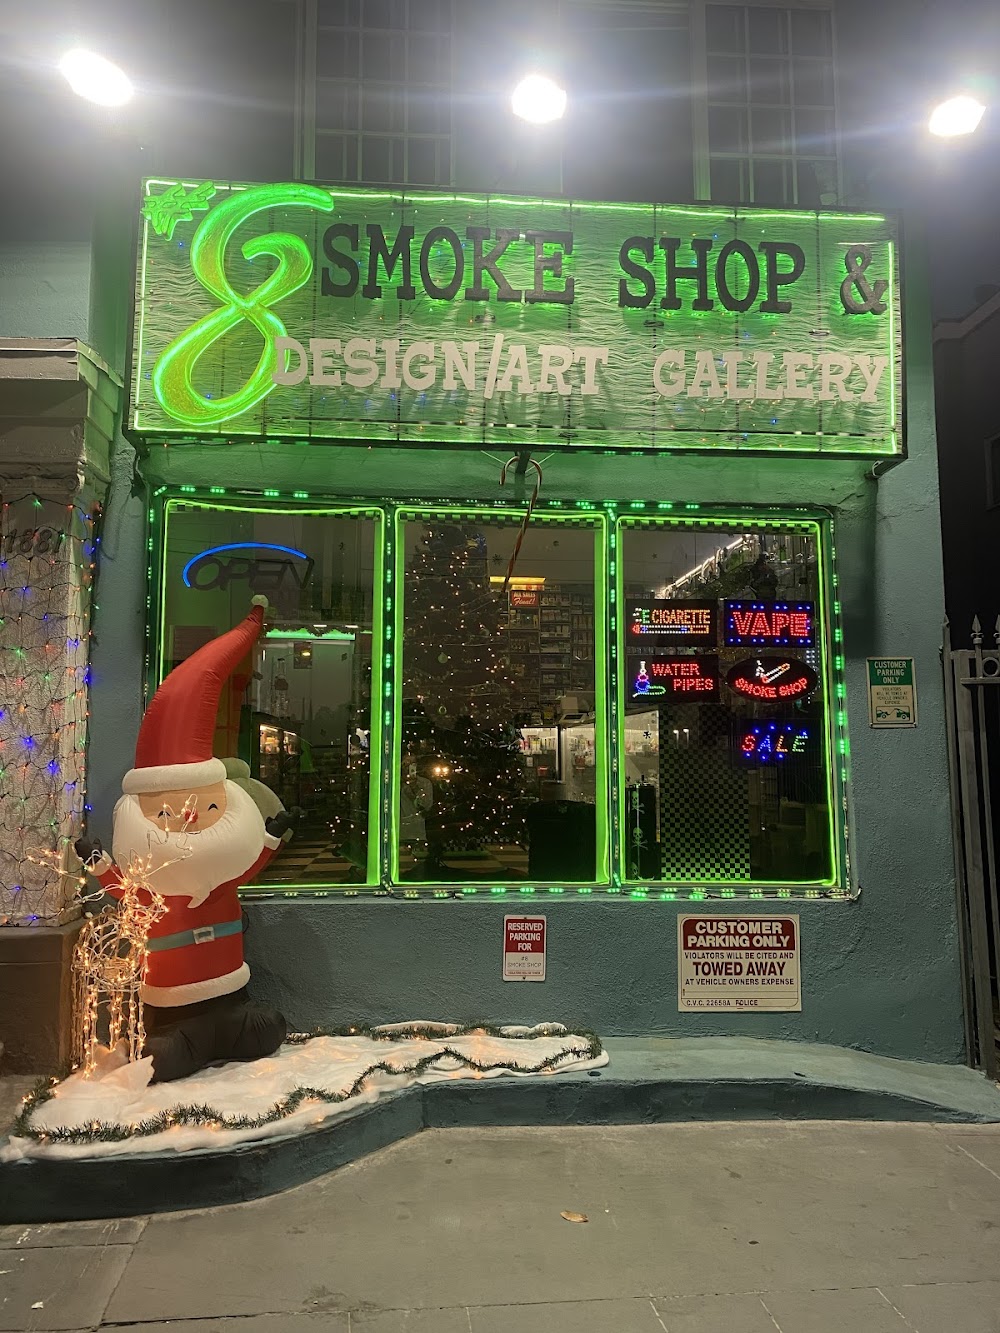 #8 Smoke Shop Design / Art Gallery